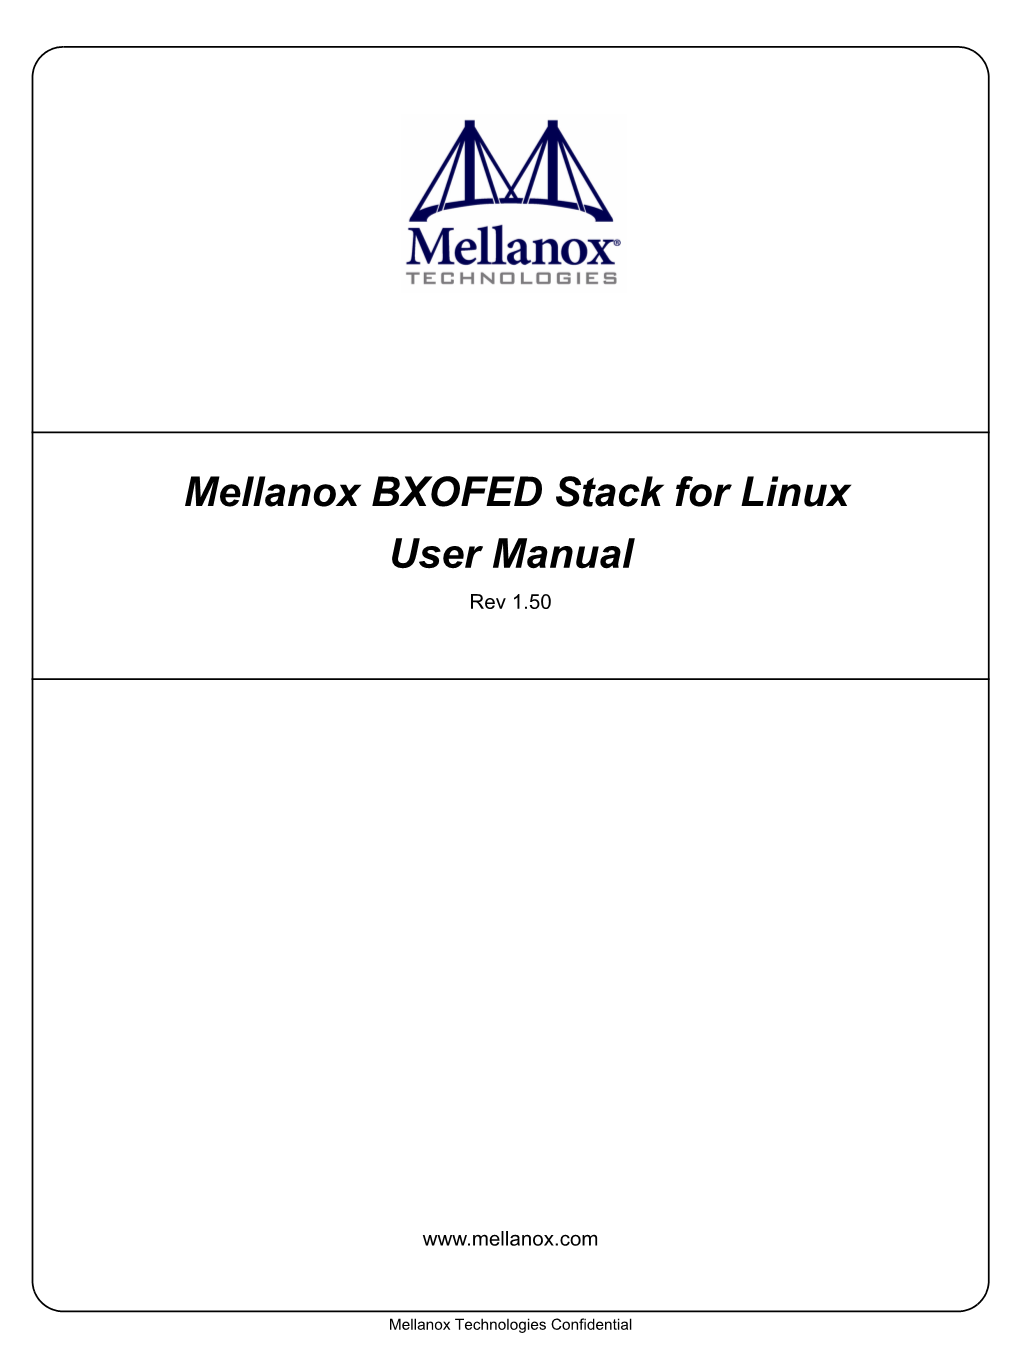 Mellanox BXOFED Stack for Linux User Manual Rev 1.50